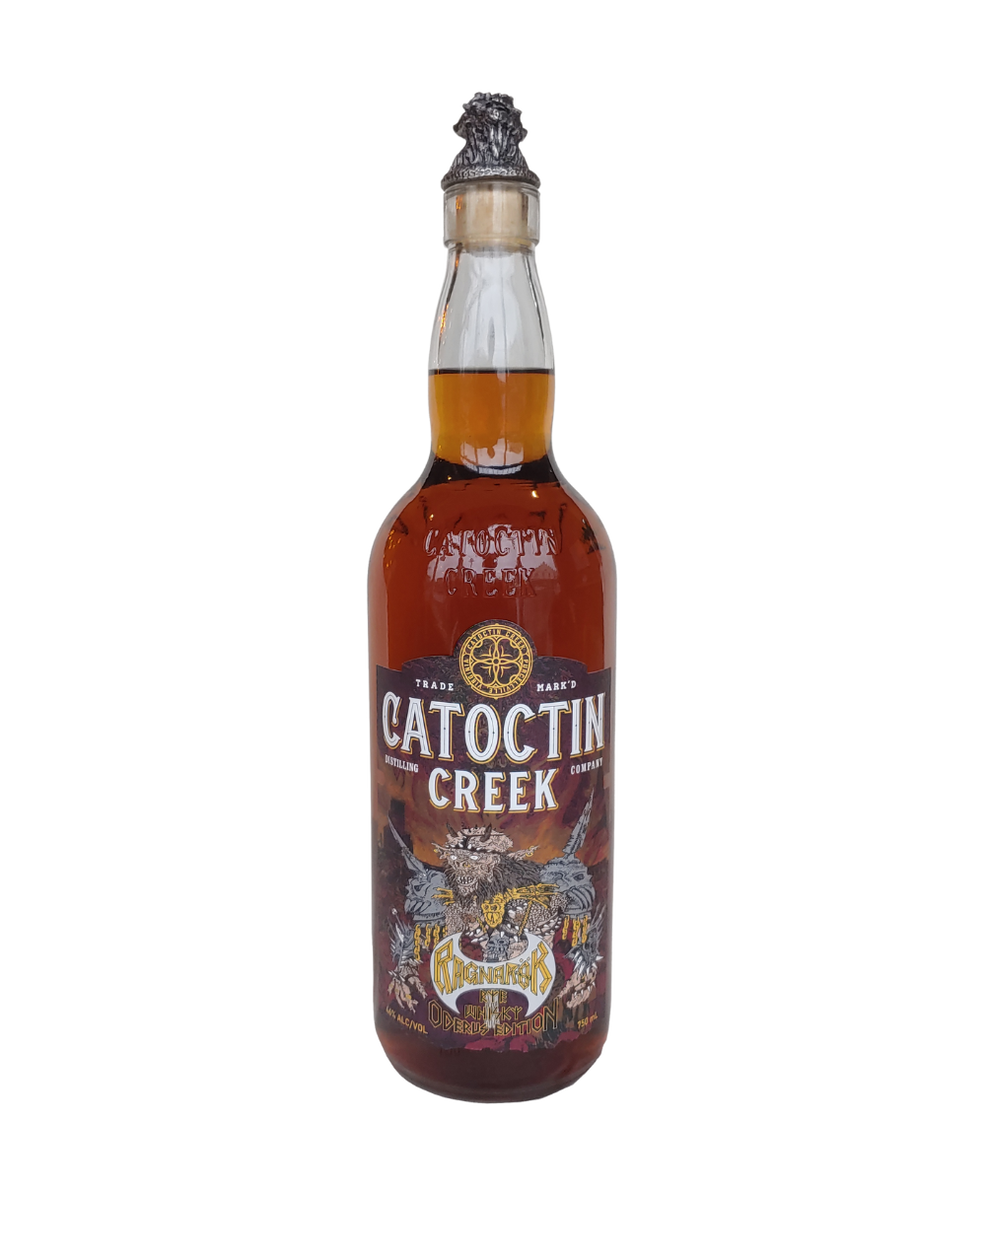 Catoctin Creek Distilling Co. Ragnarök Rye Whiskey